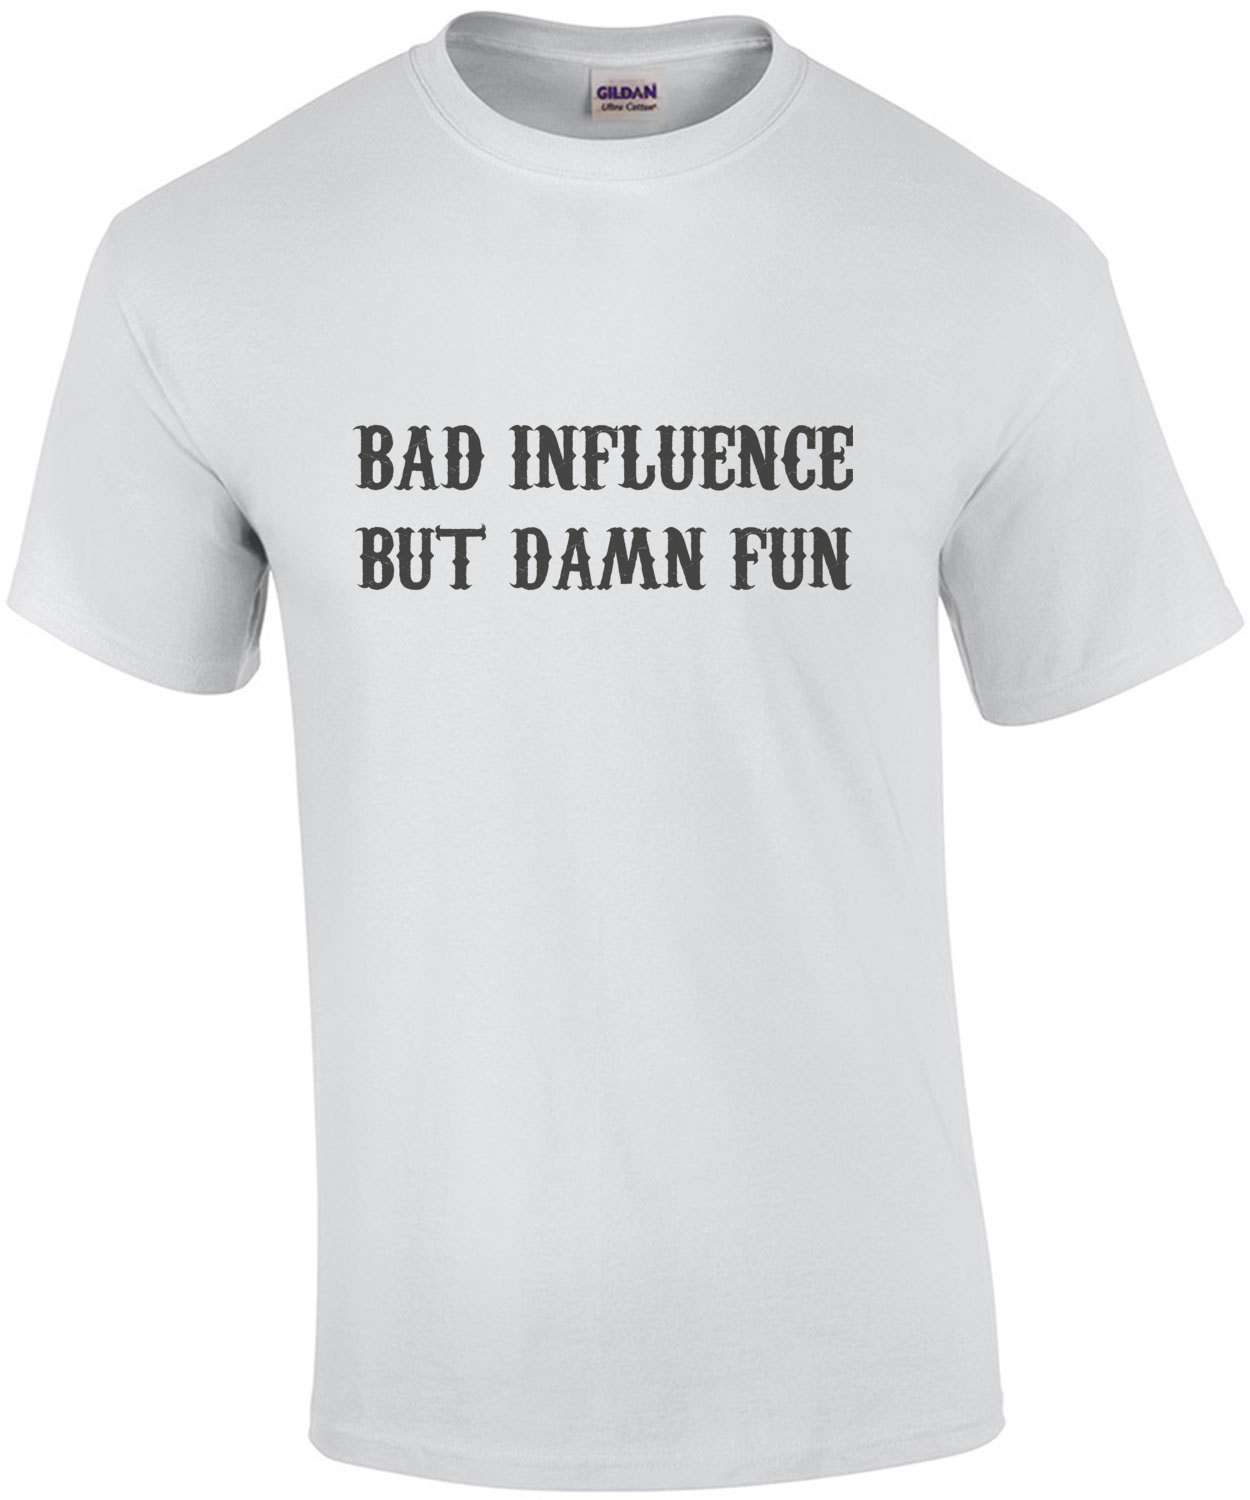 Bad Influence but damn fun - funny t-shirt